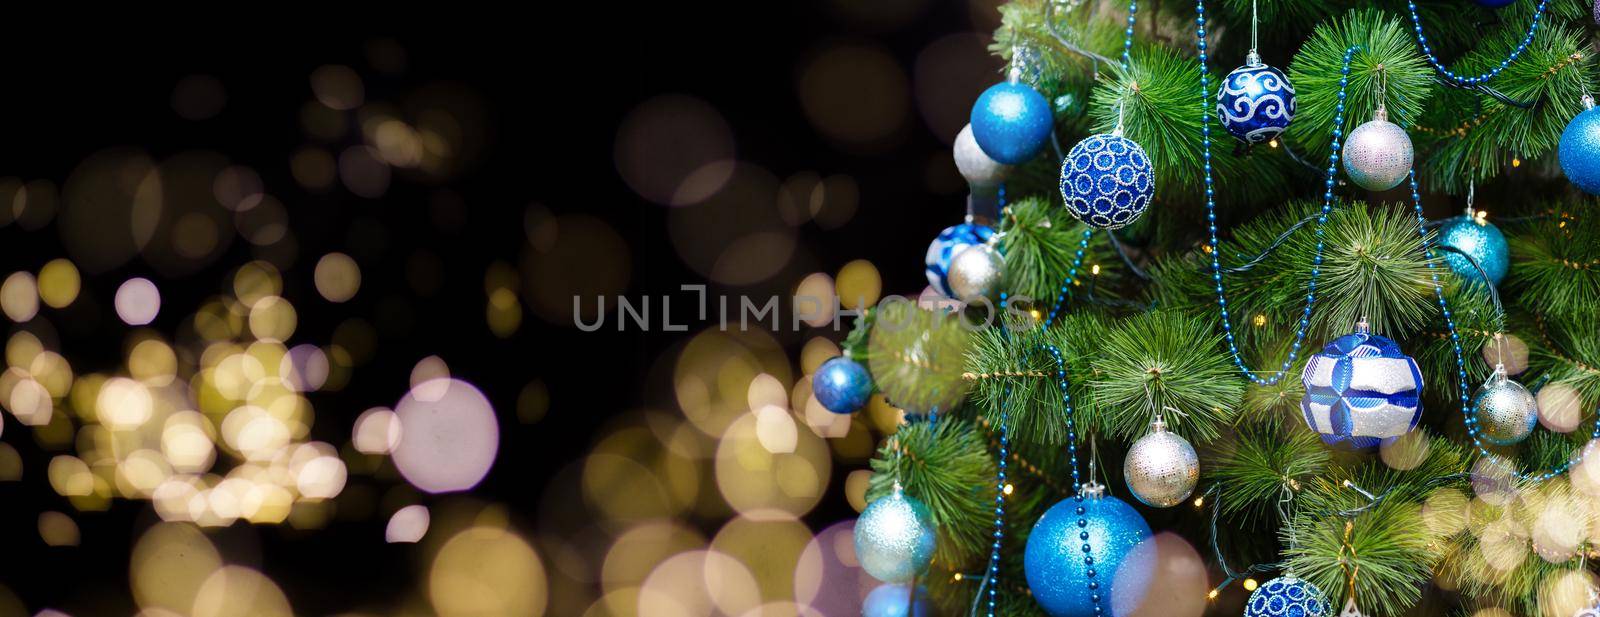 Decorated Christmas tree closeup, balls, garland.